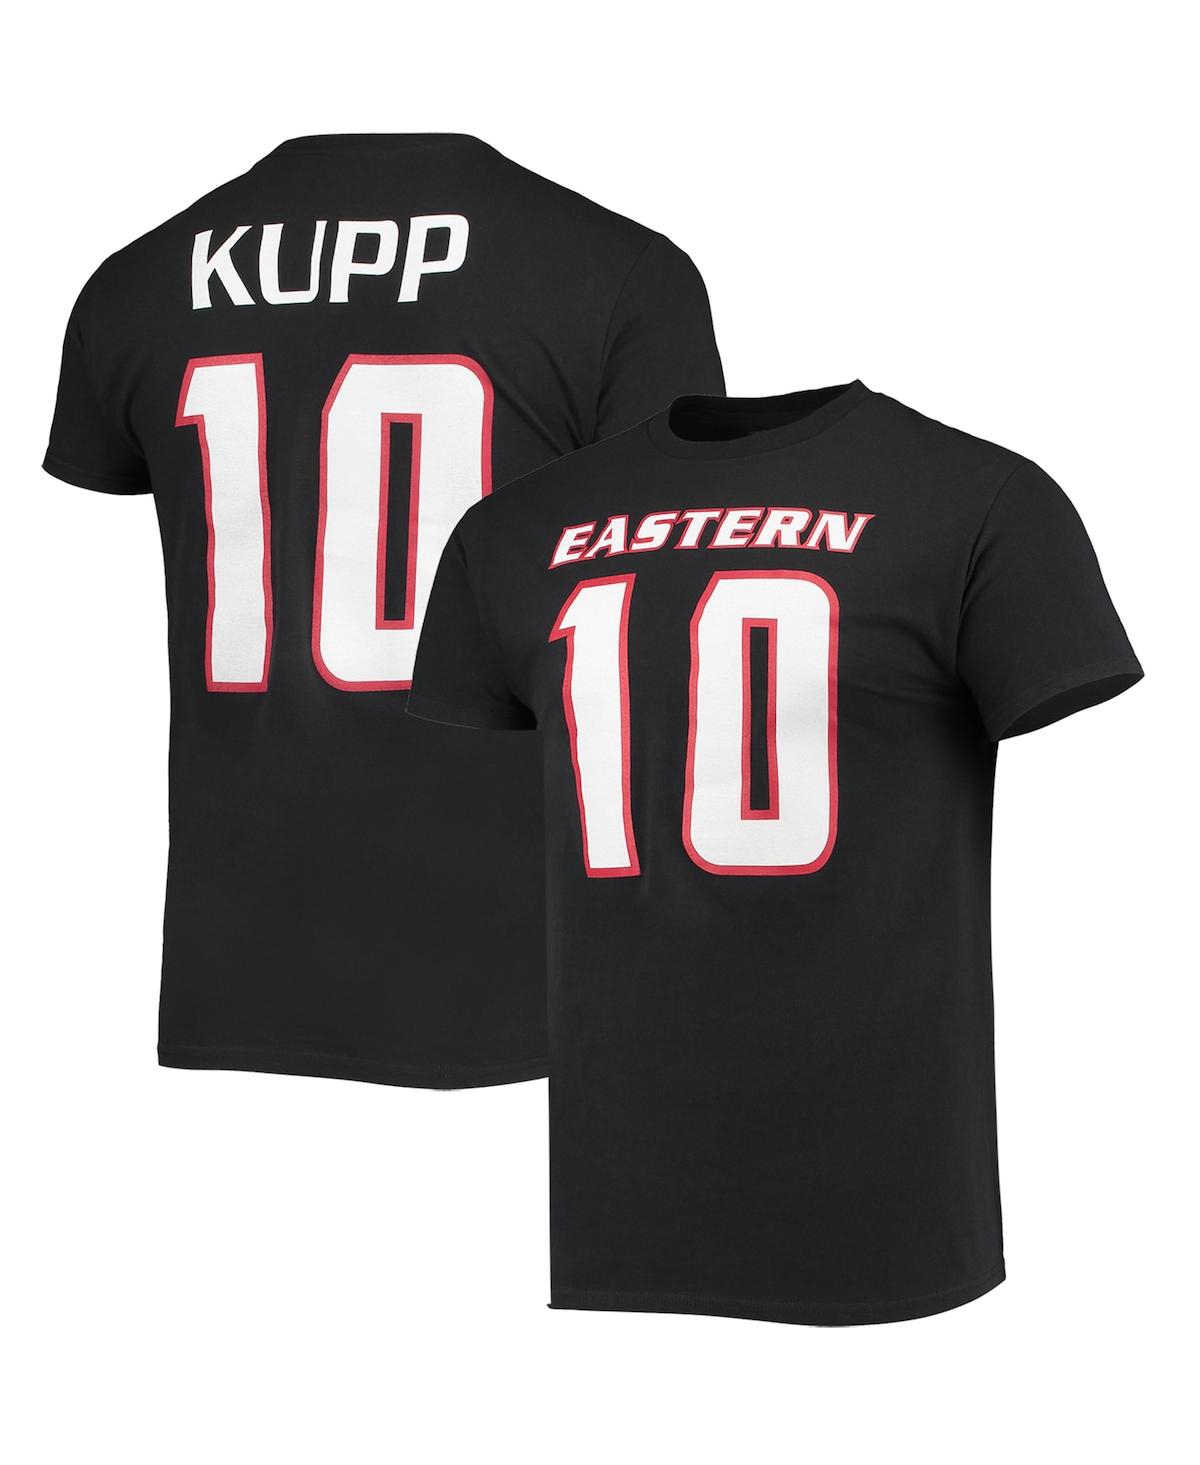 Shop Retro Brand Men's Original  Cooper Kupp Black Eastern Washington Eagles Player T-shirt